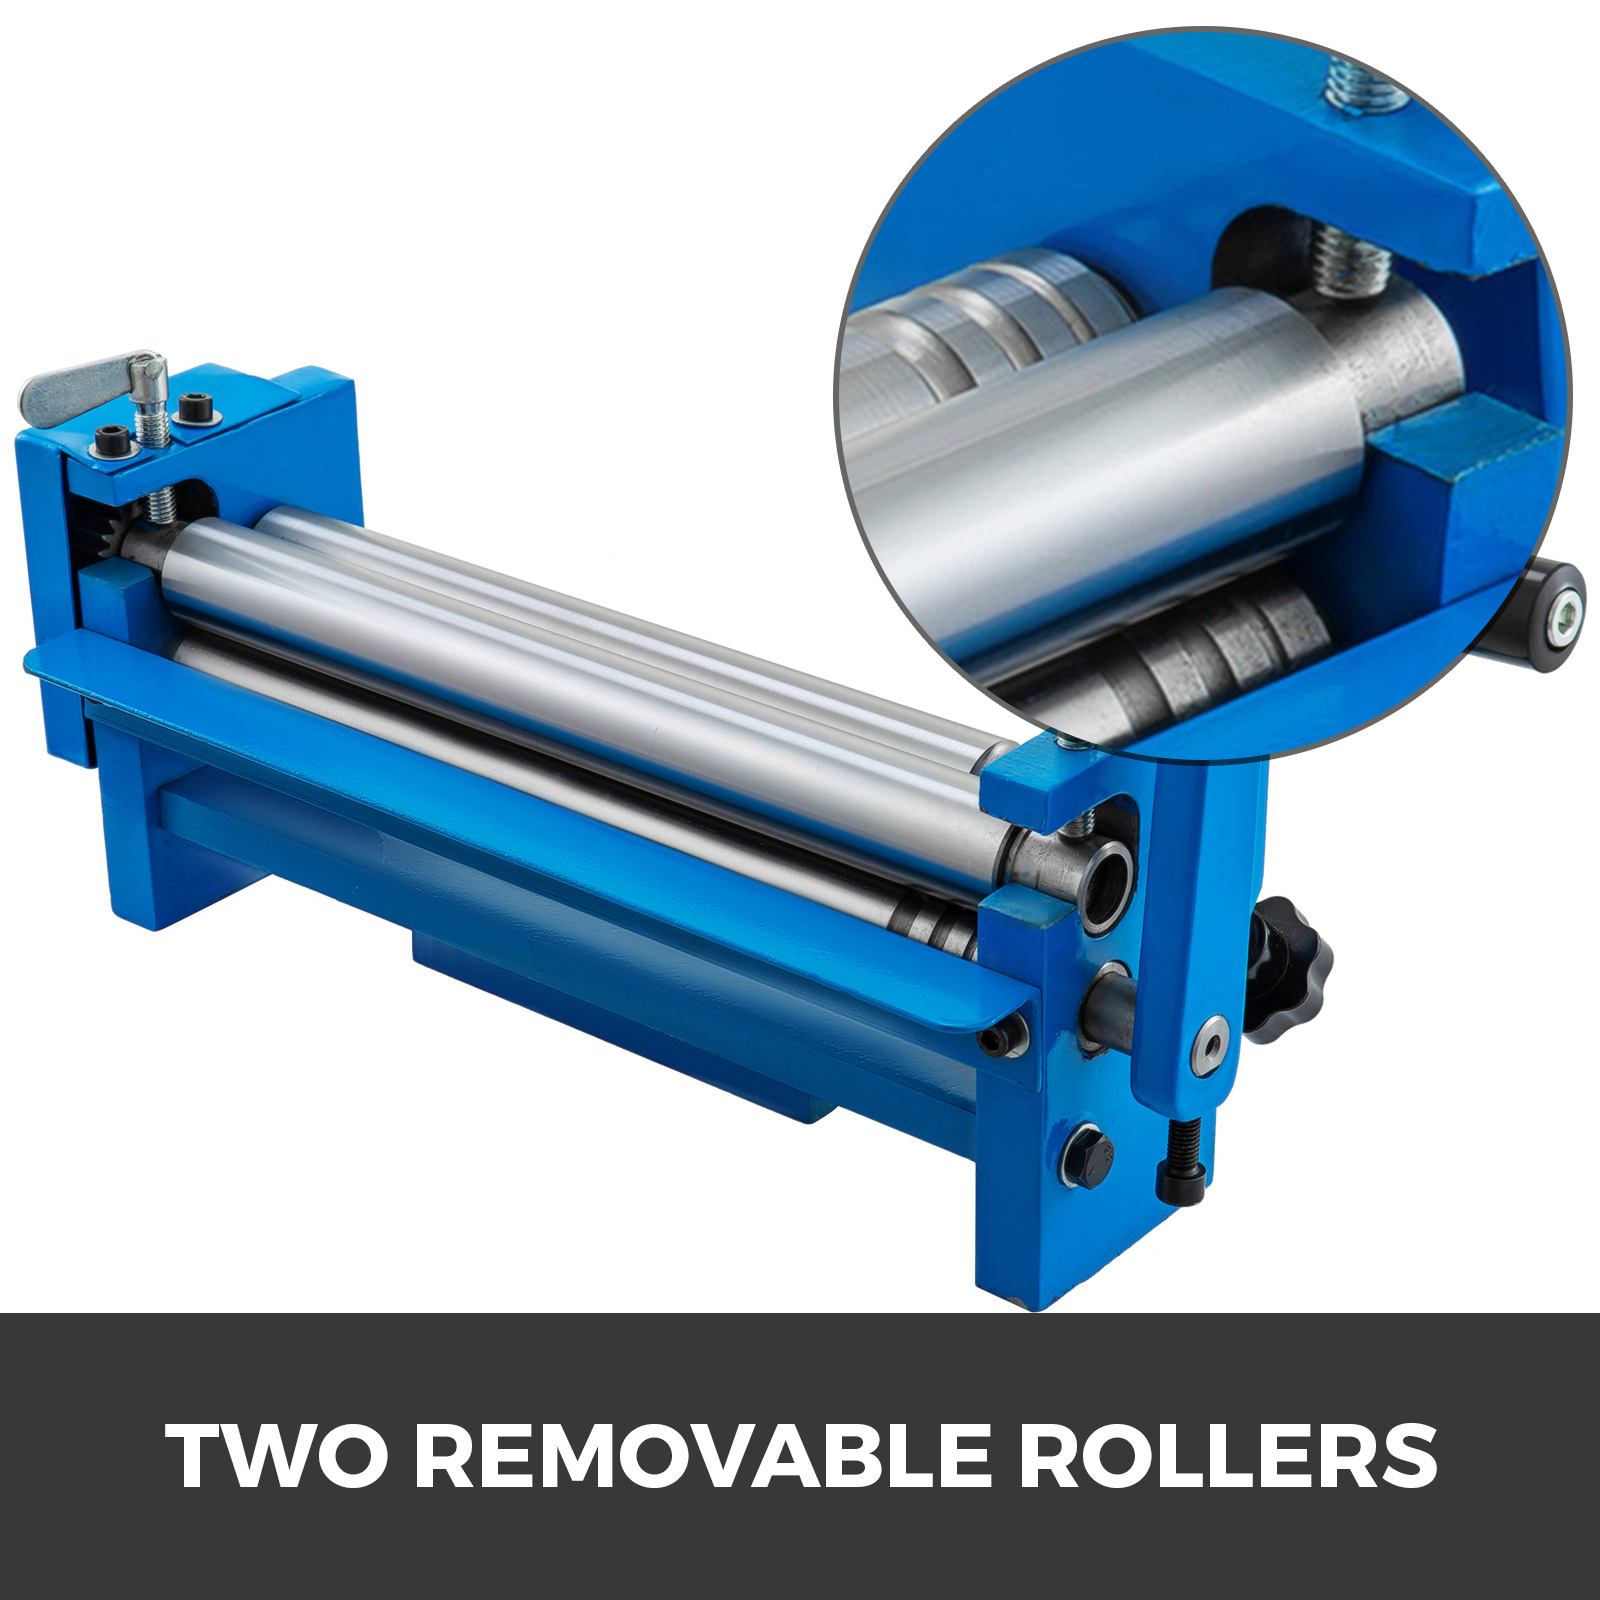 SJ-300 Slip Roll Machine 300mm Slip Roller Bender 2.5mm Sheet Metal Fabrication 